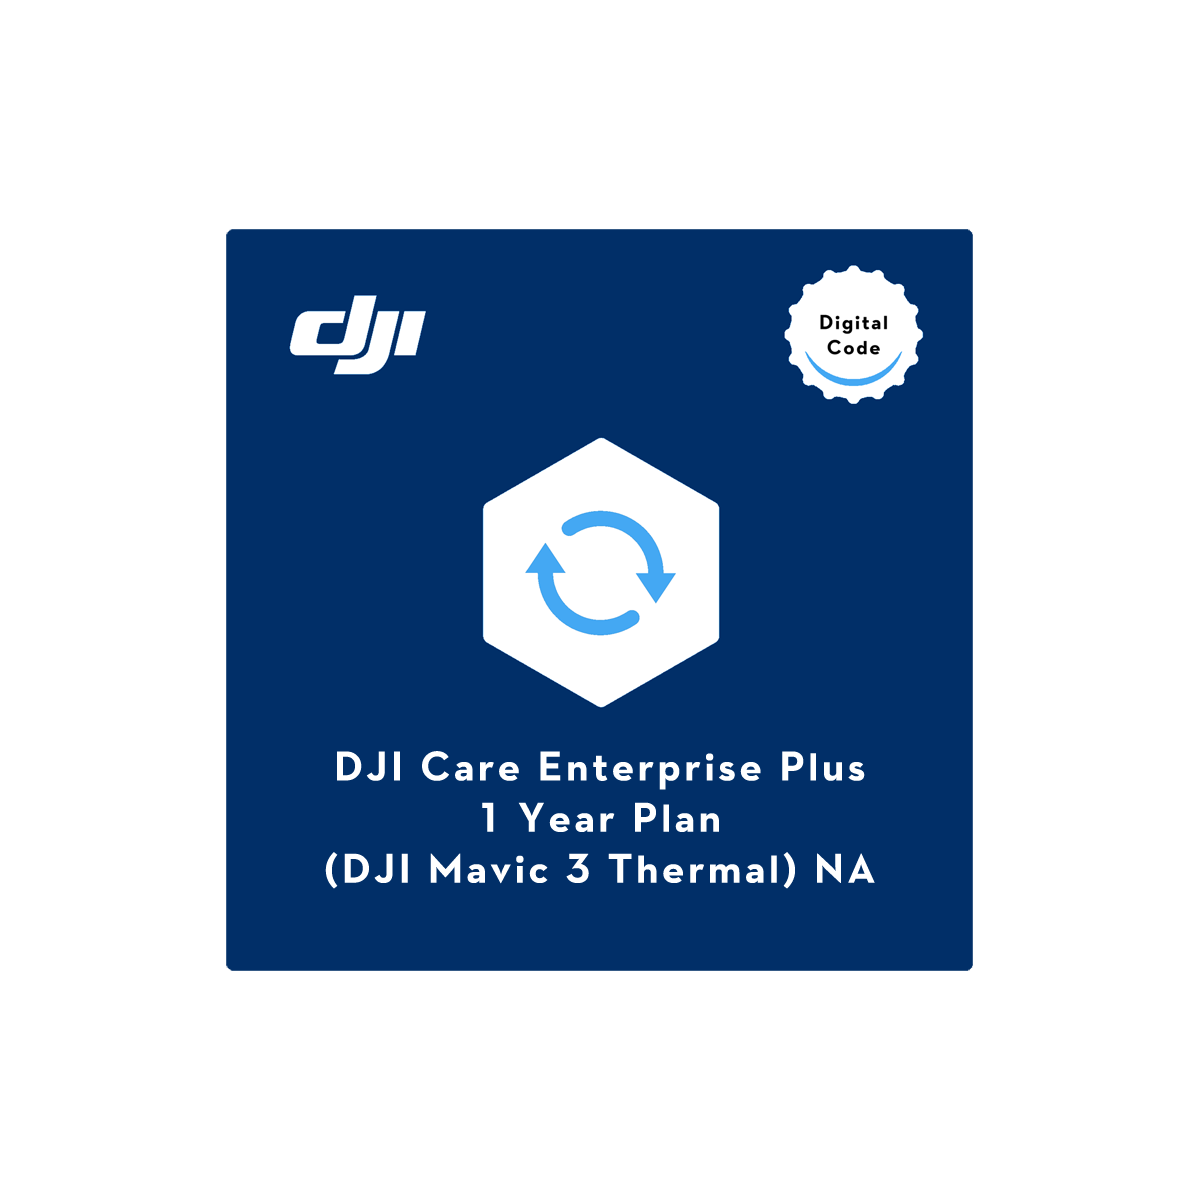 DJI Care Enterprise Plus (Mavic 3 Thermal) NA